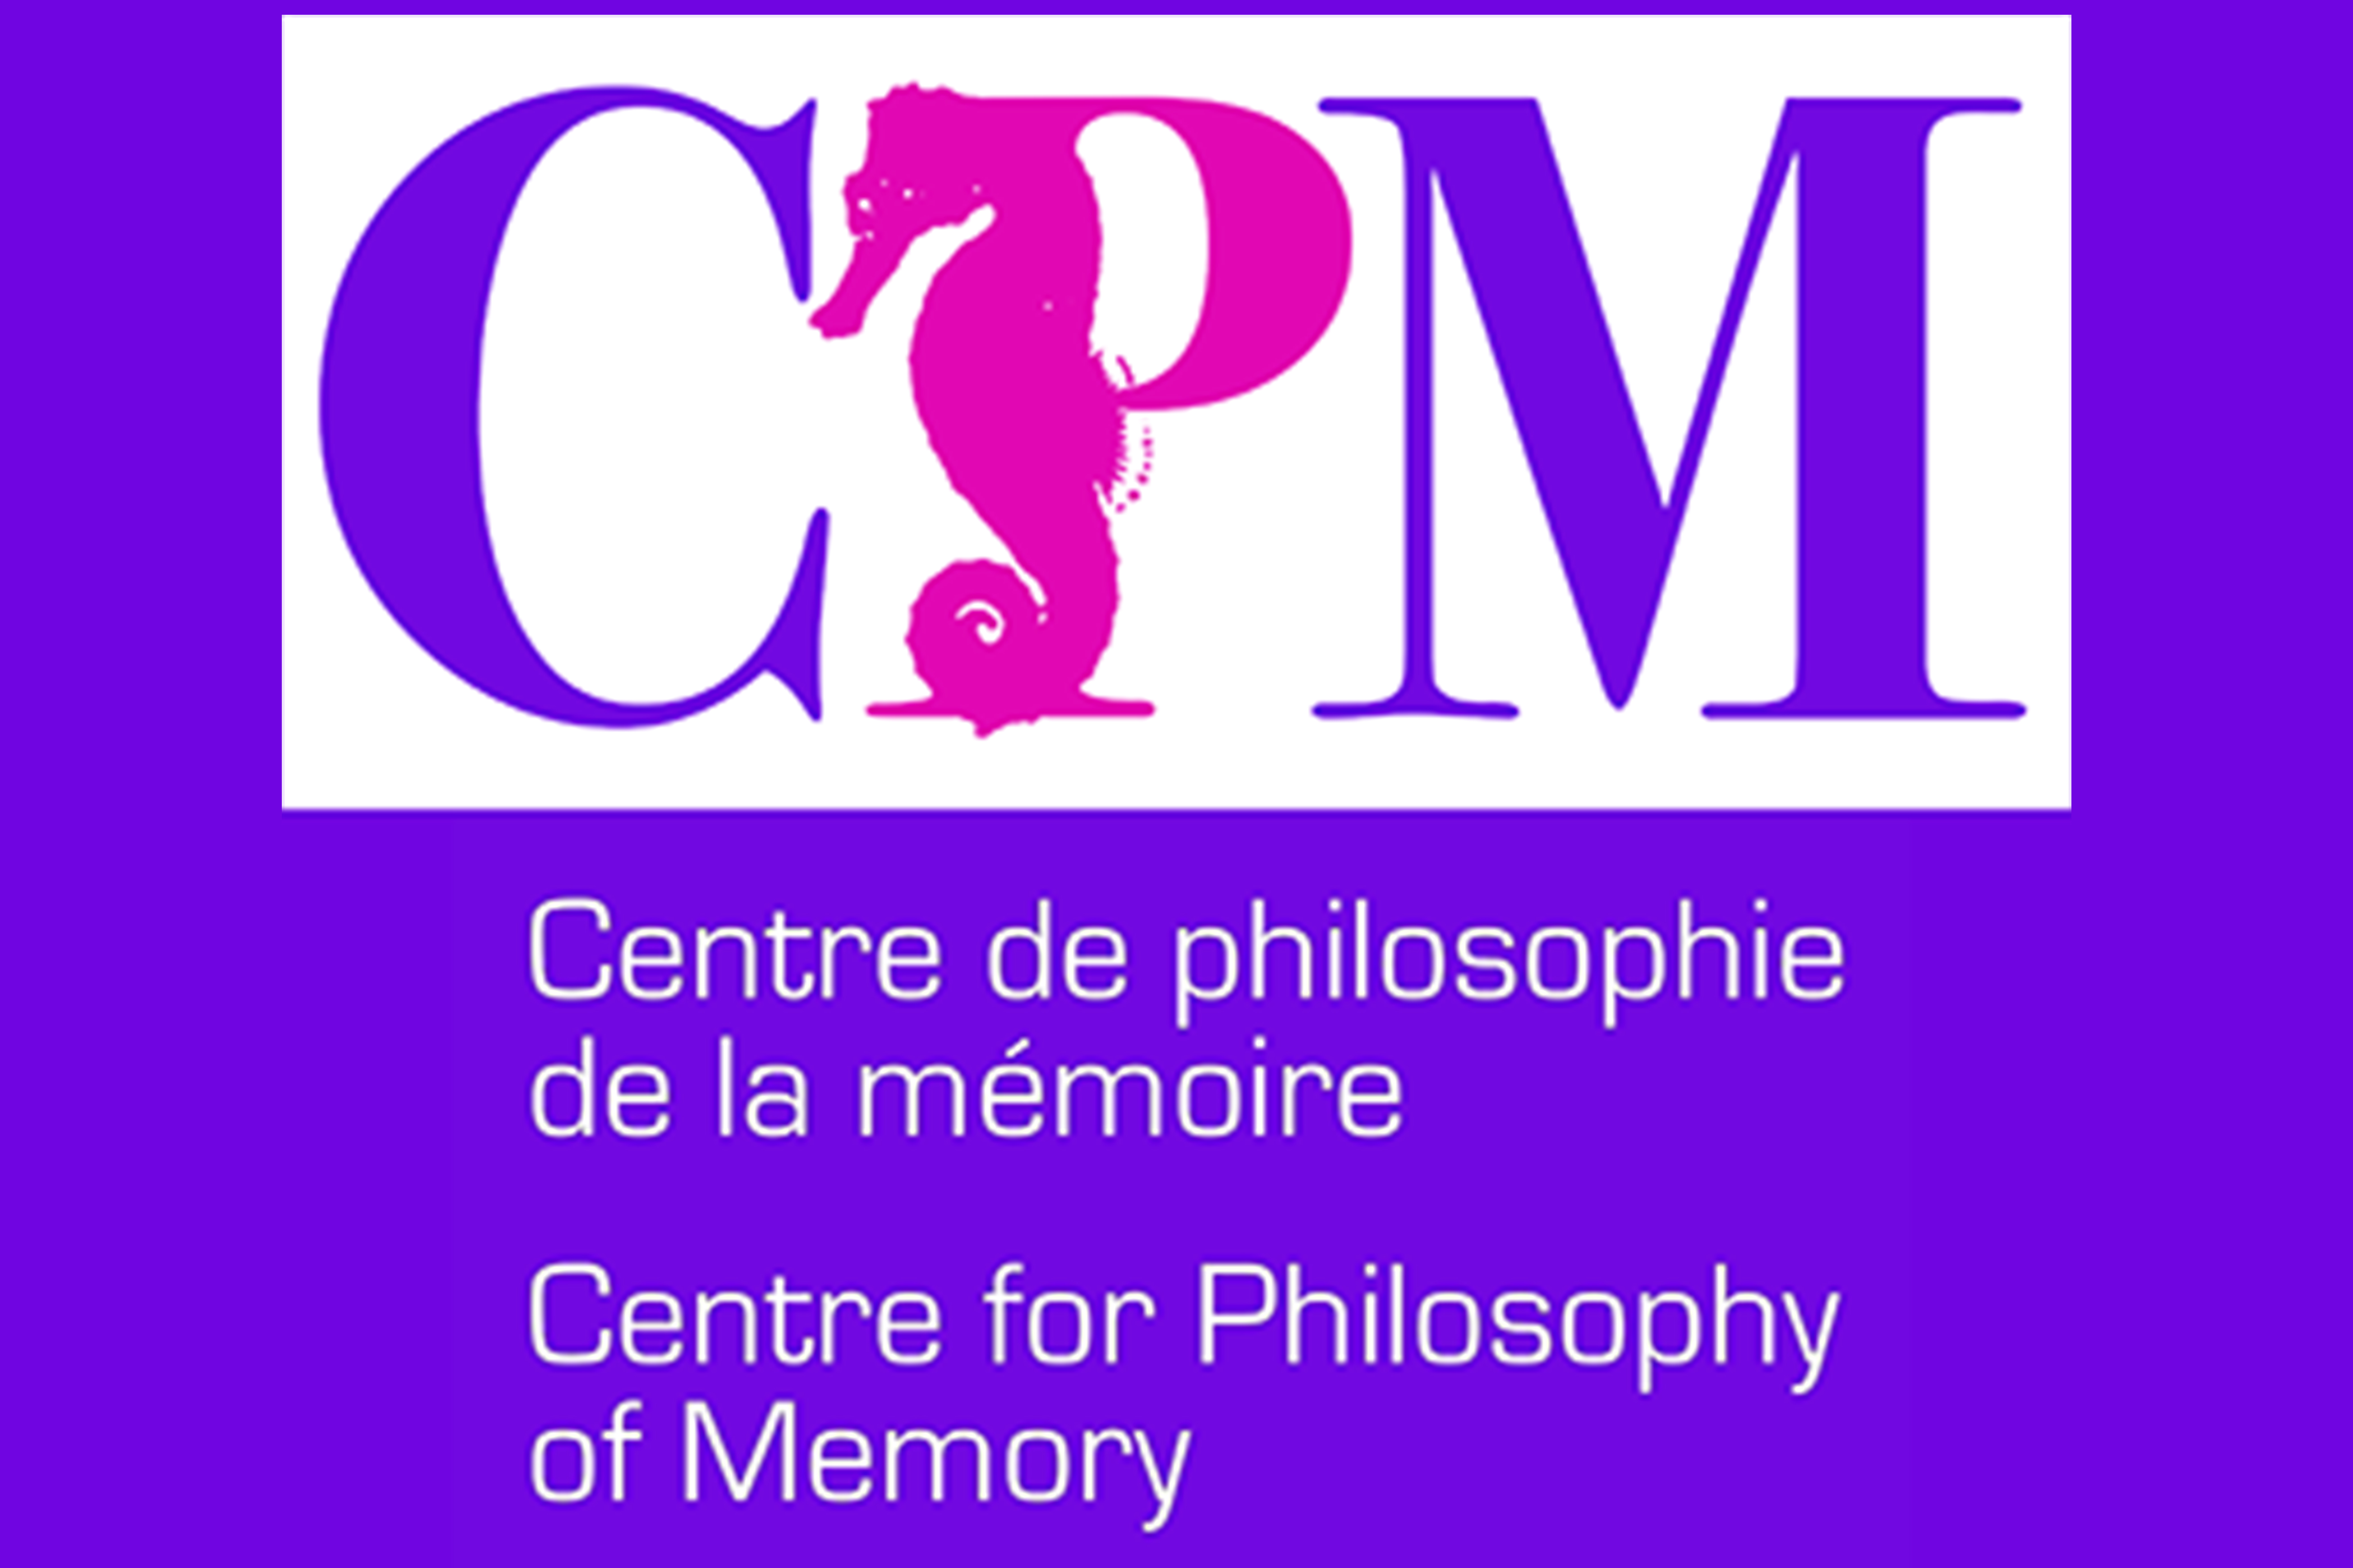 Center for Philosophy of Memory